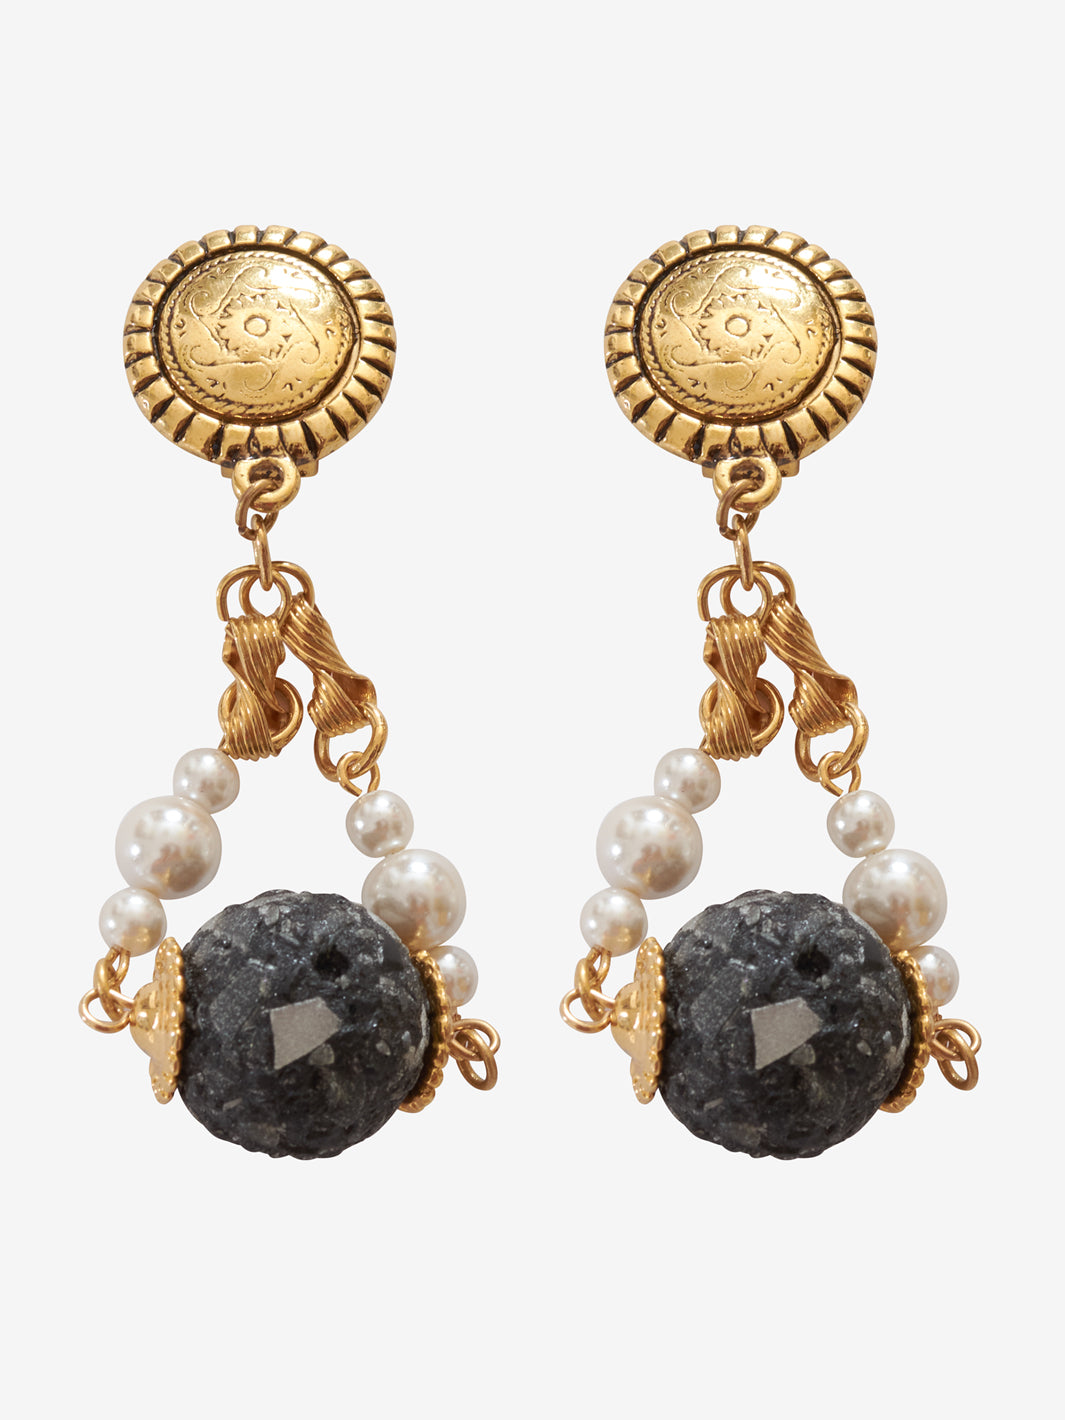 Vintage earrings with black stone